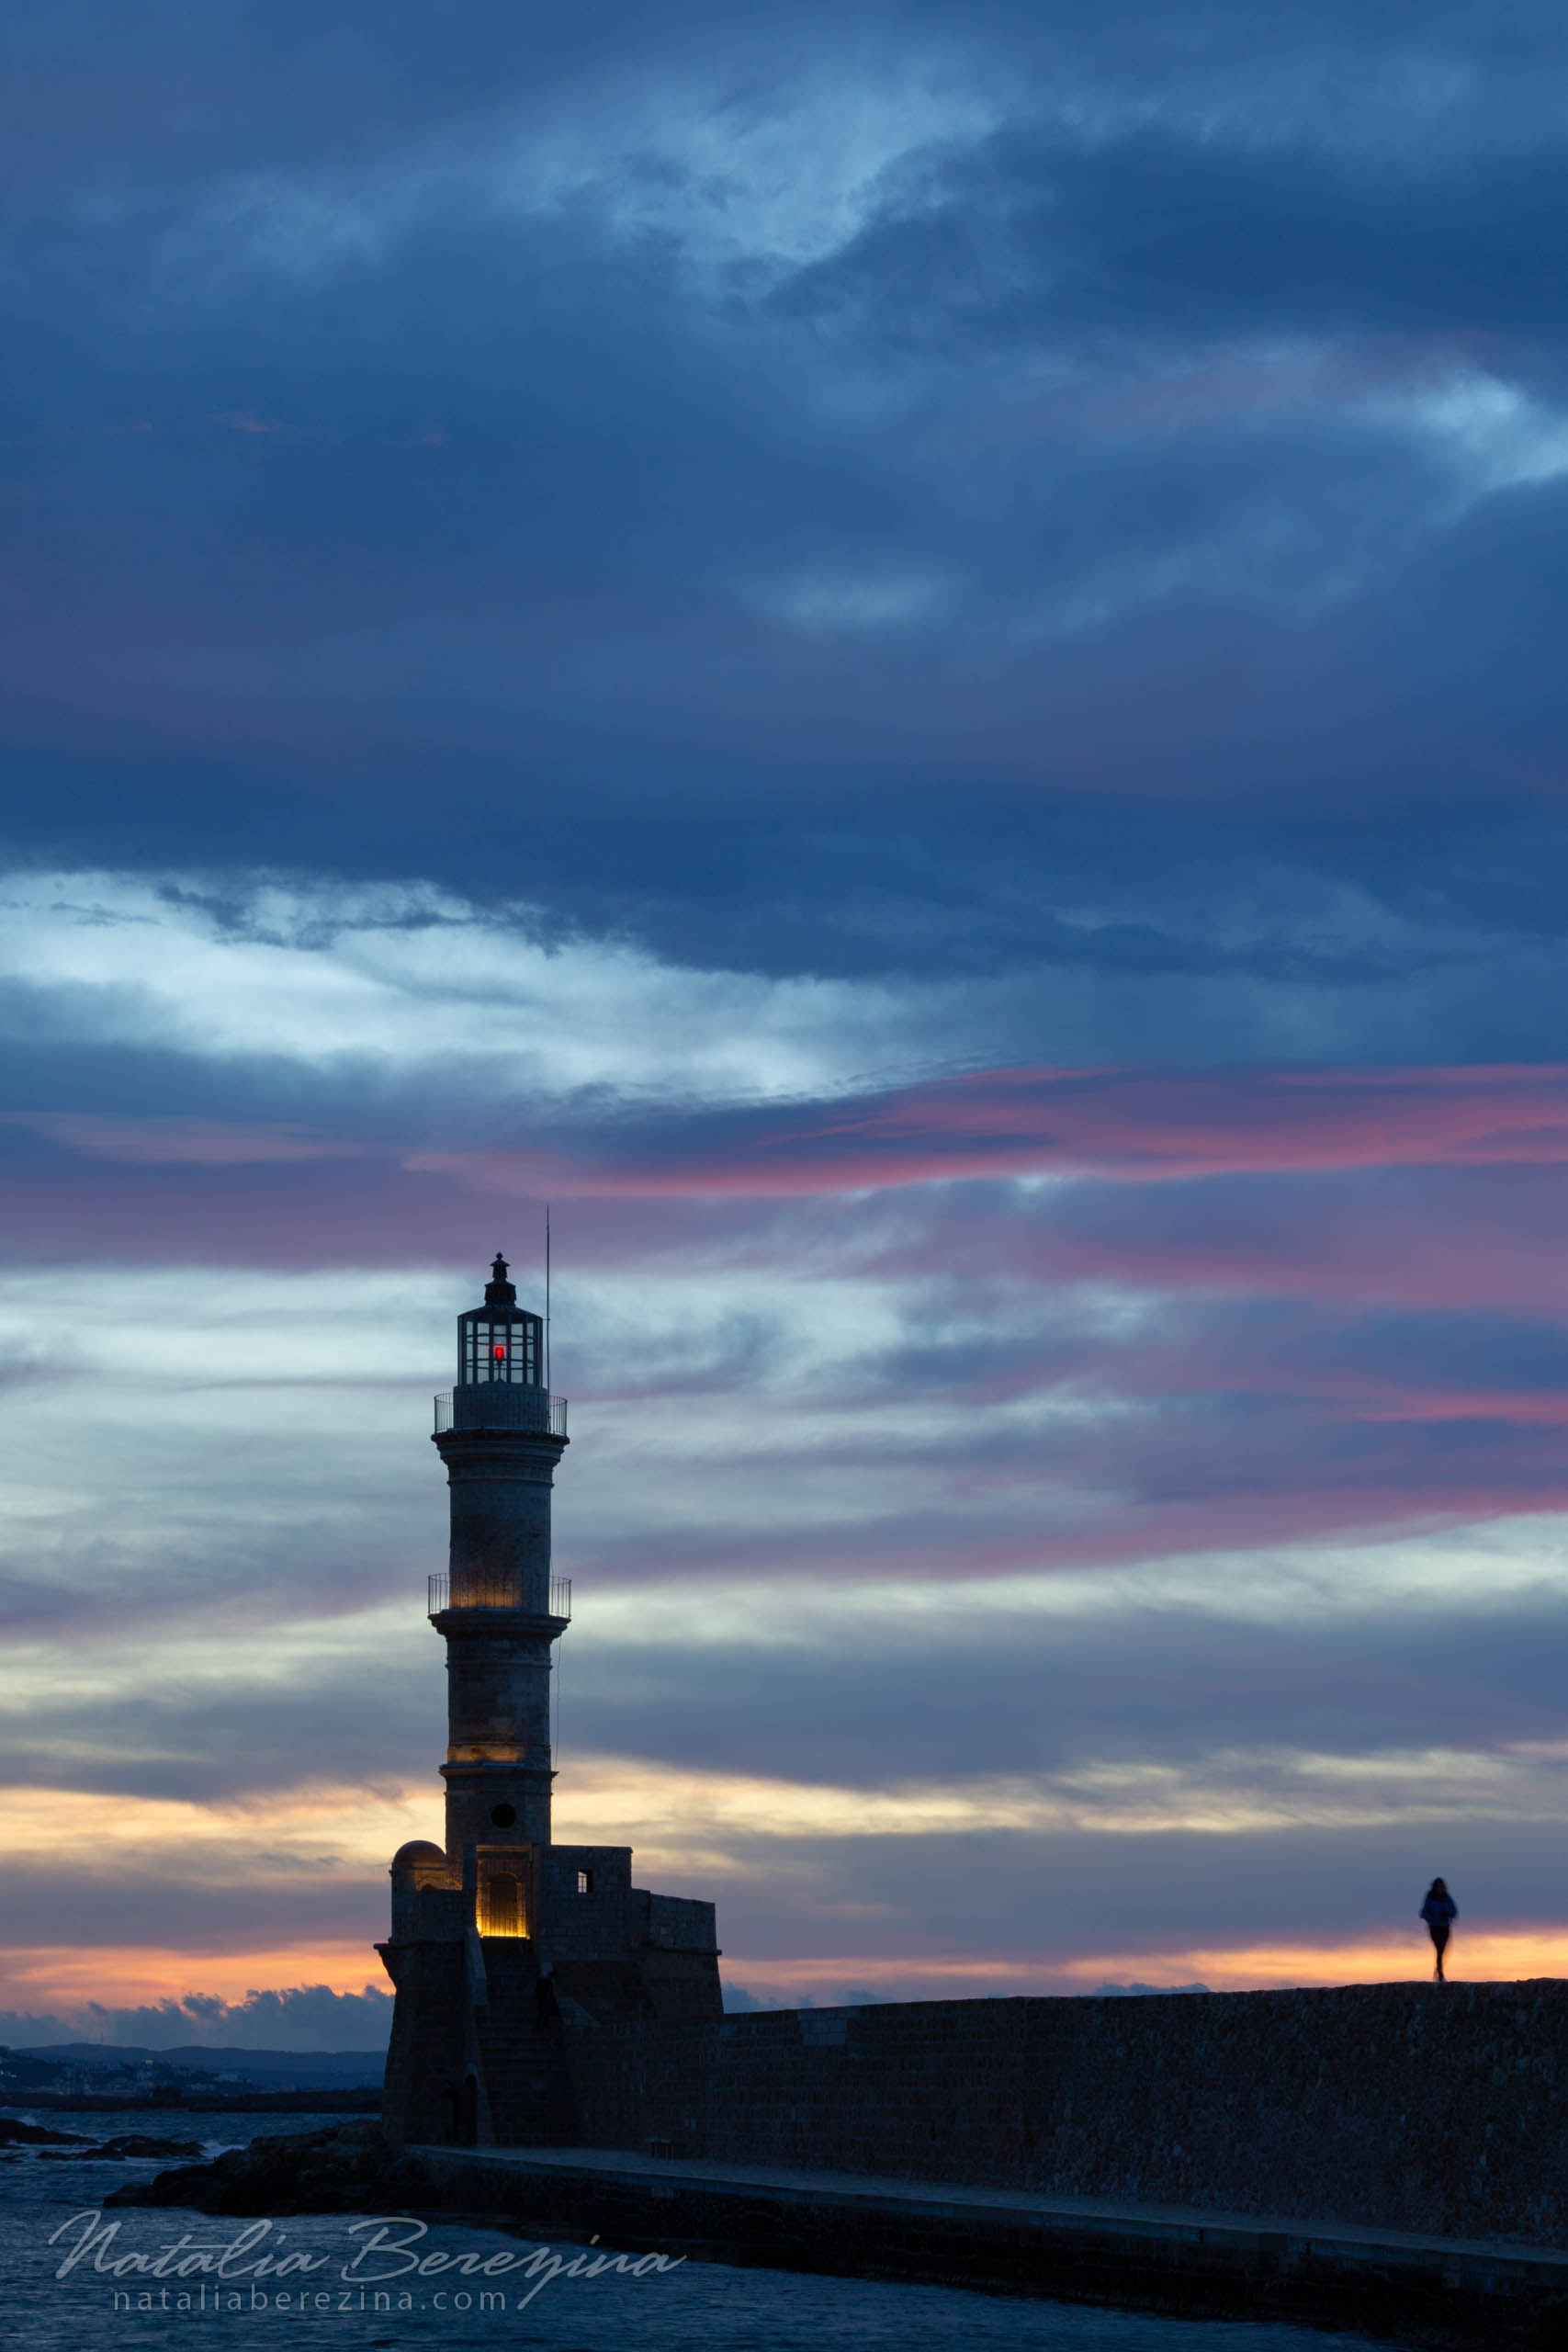 Greece, Crete, cloud, sunset, lighthouse, pink, sky, vertical CR1-NBDK1U0908 - Crete, Greece - Natalia Berezina Photography